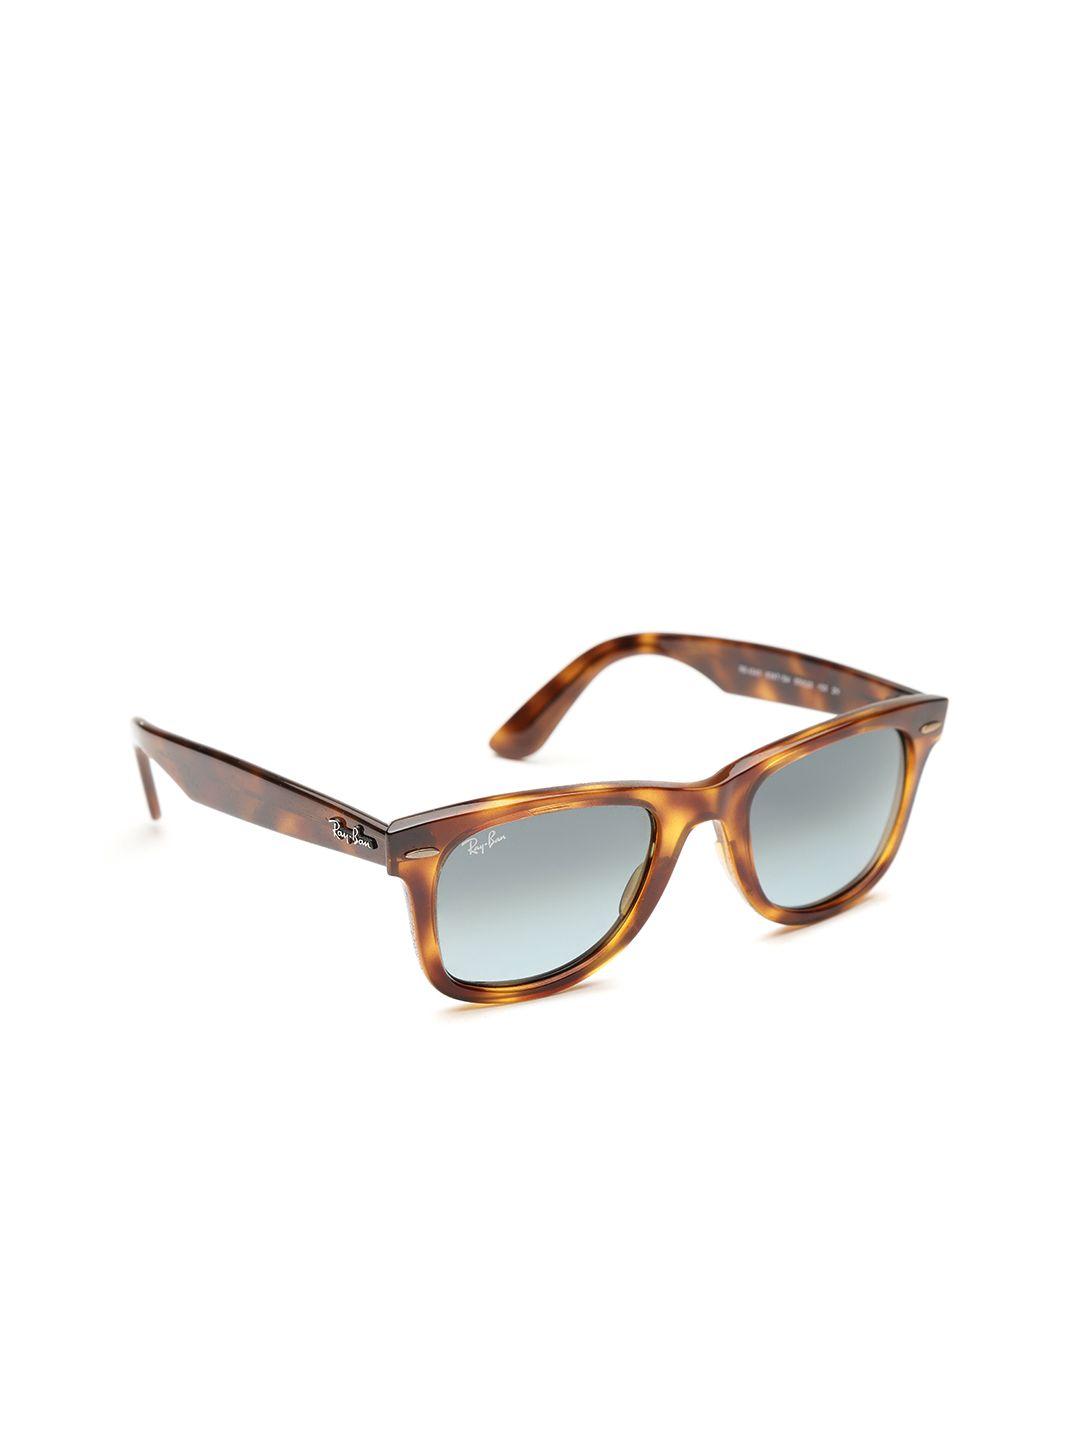 ray-ban unisex wayfarer sunglasses 0rb434063973m50